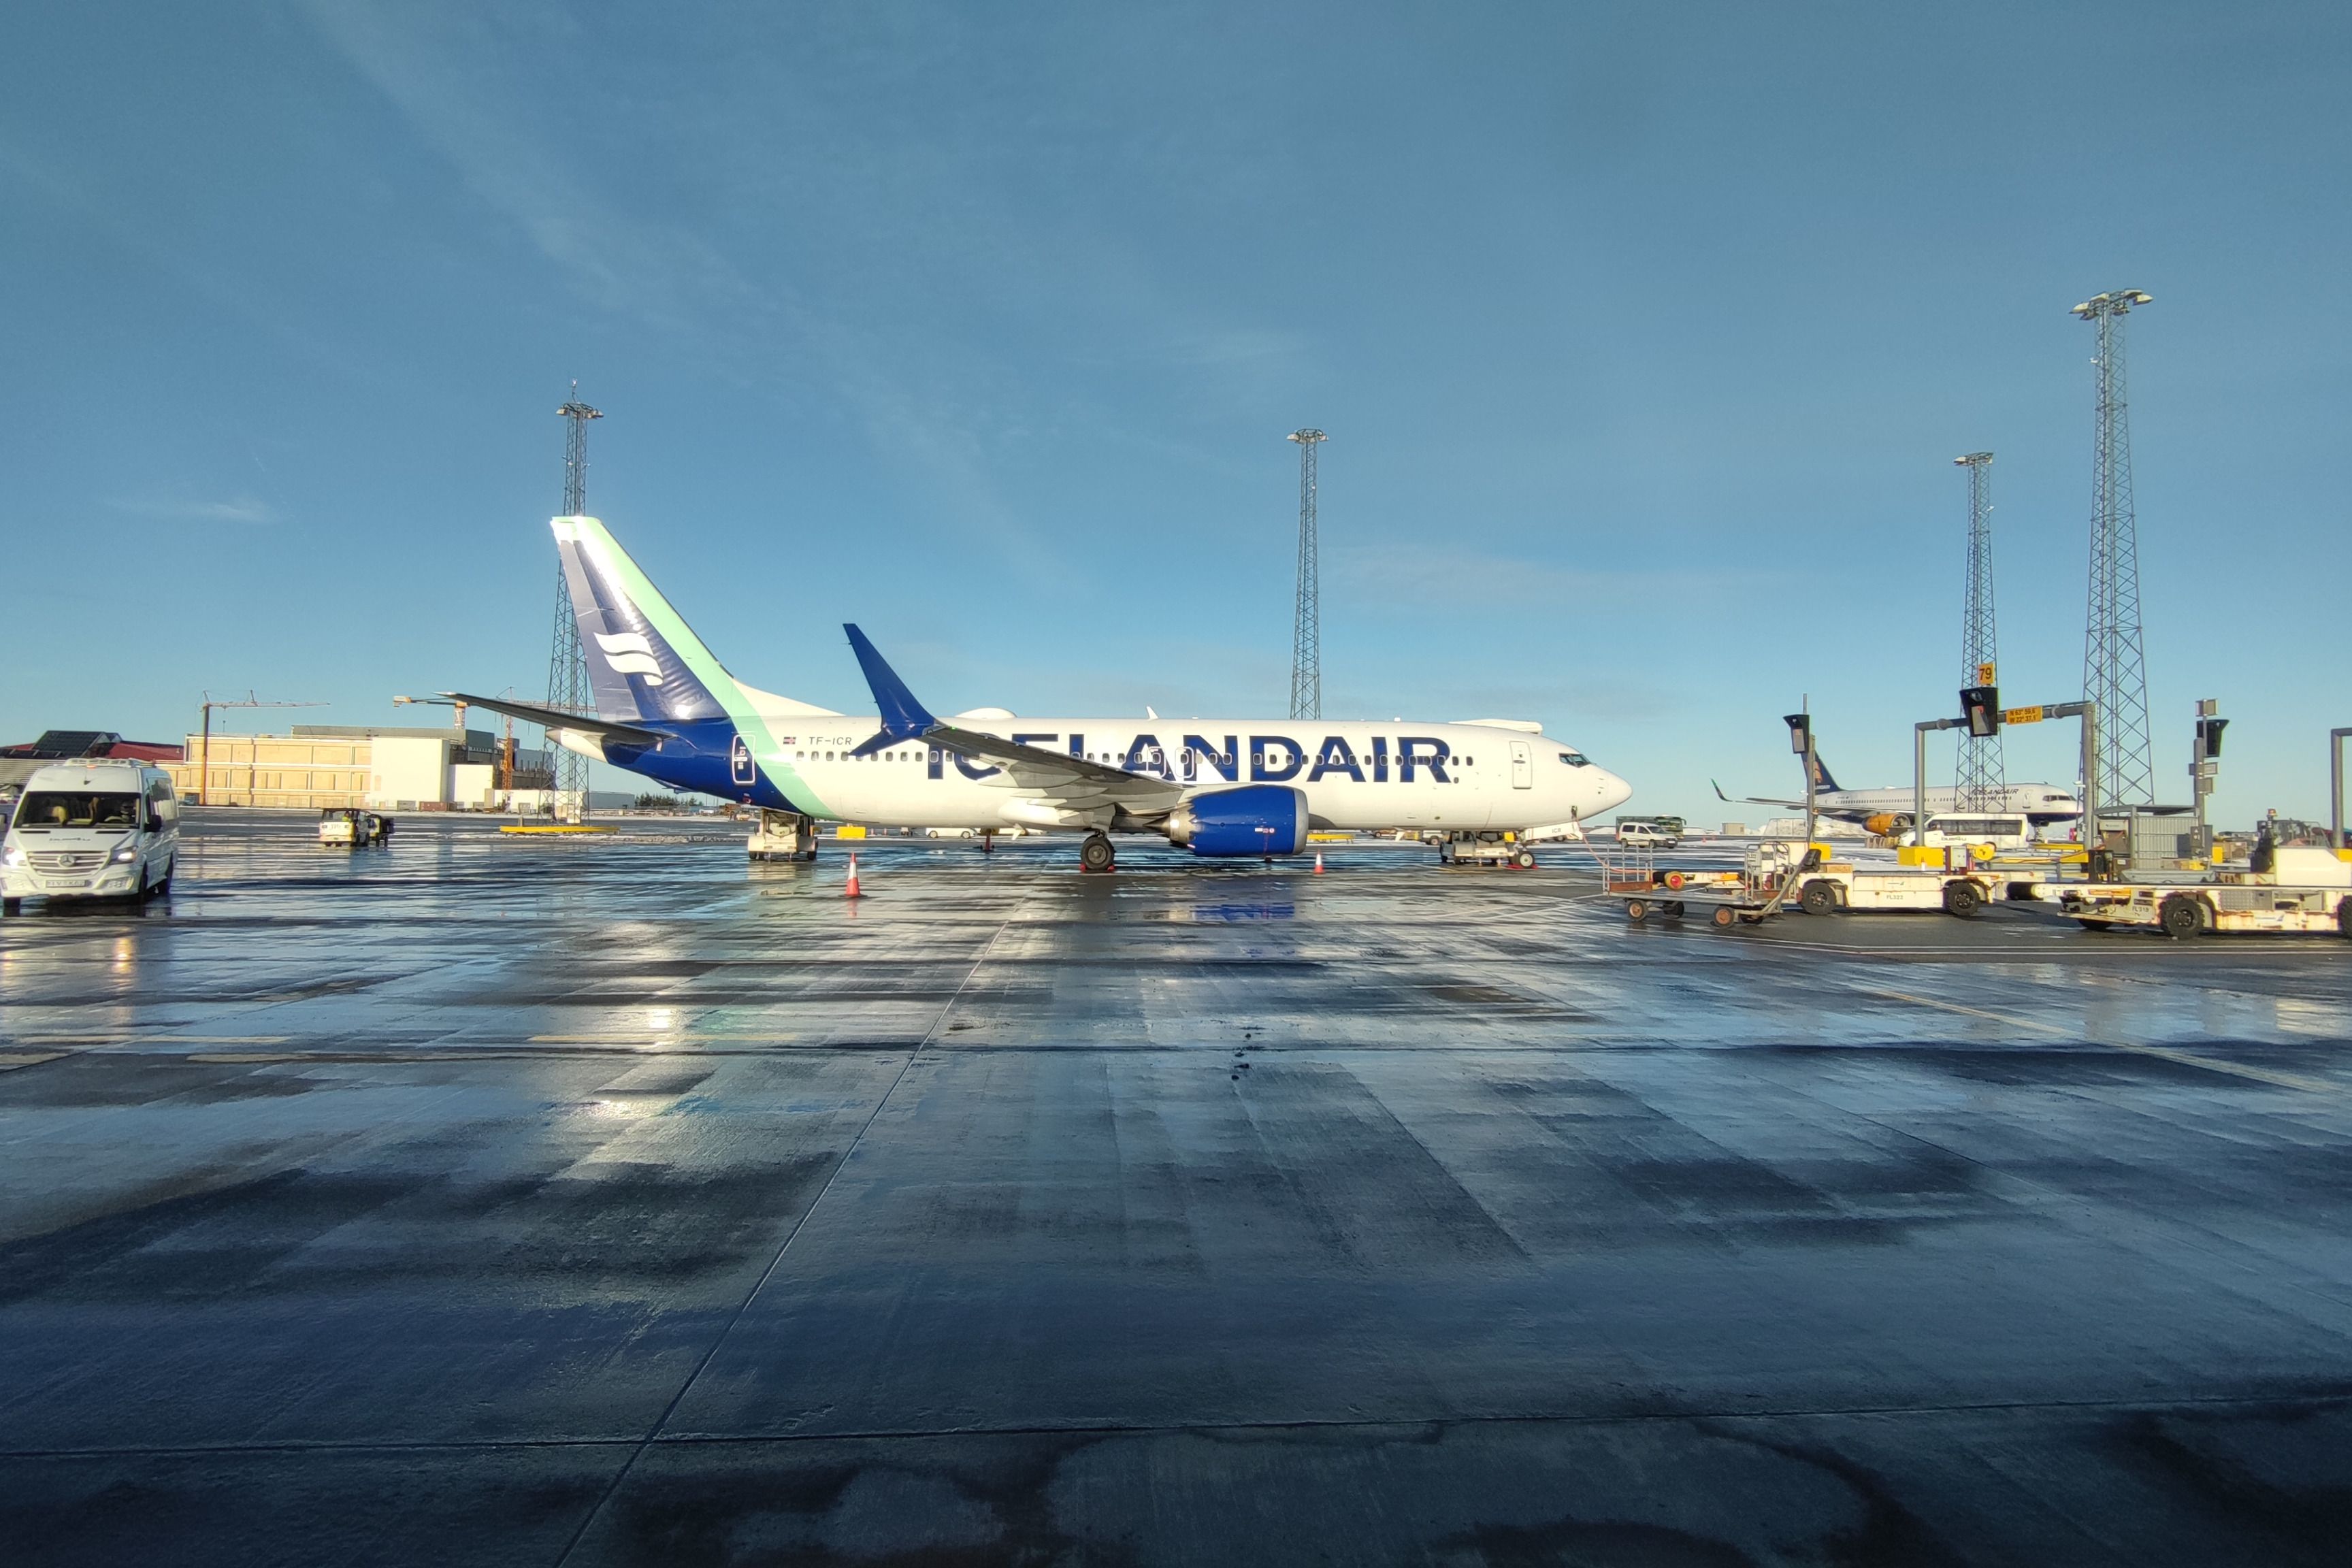 An Icelandair Boeing 737 aircraft parked in Keflavik airport